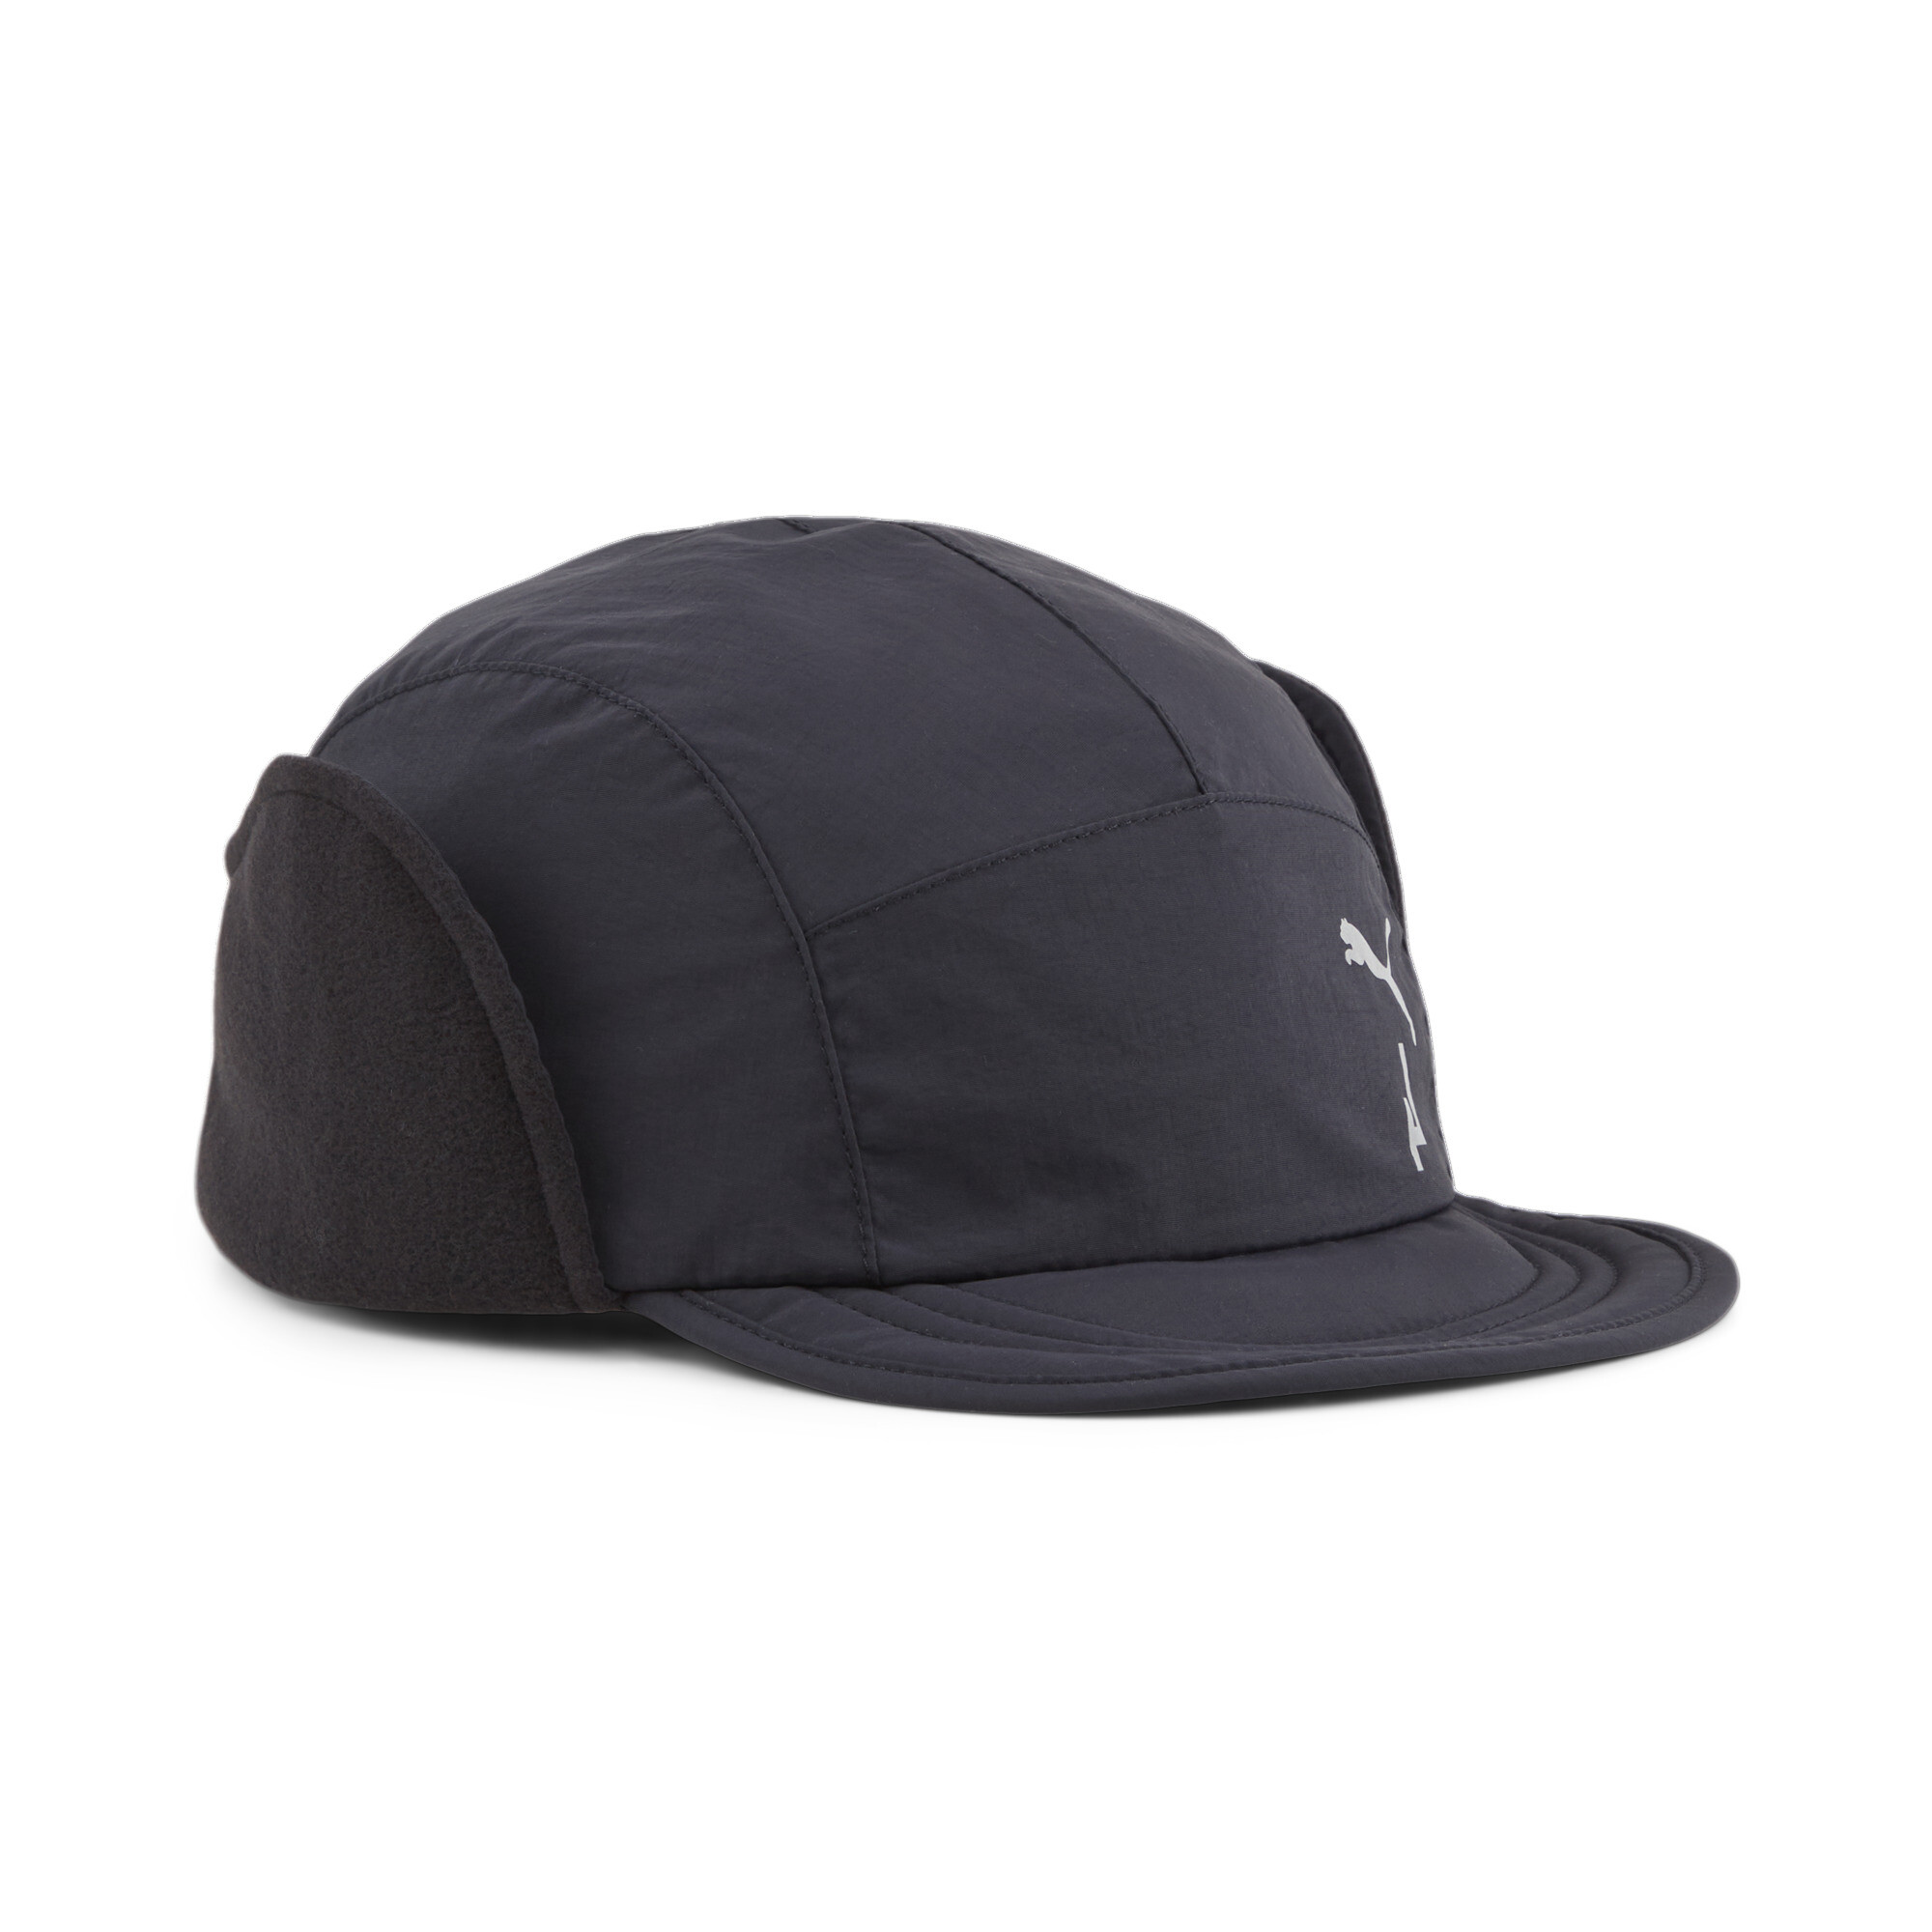 Puma SEASONS Winter Cap, Black, Size L/XL, Accessories